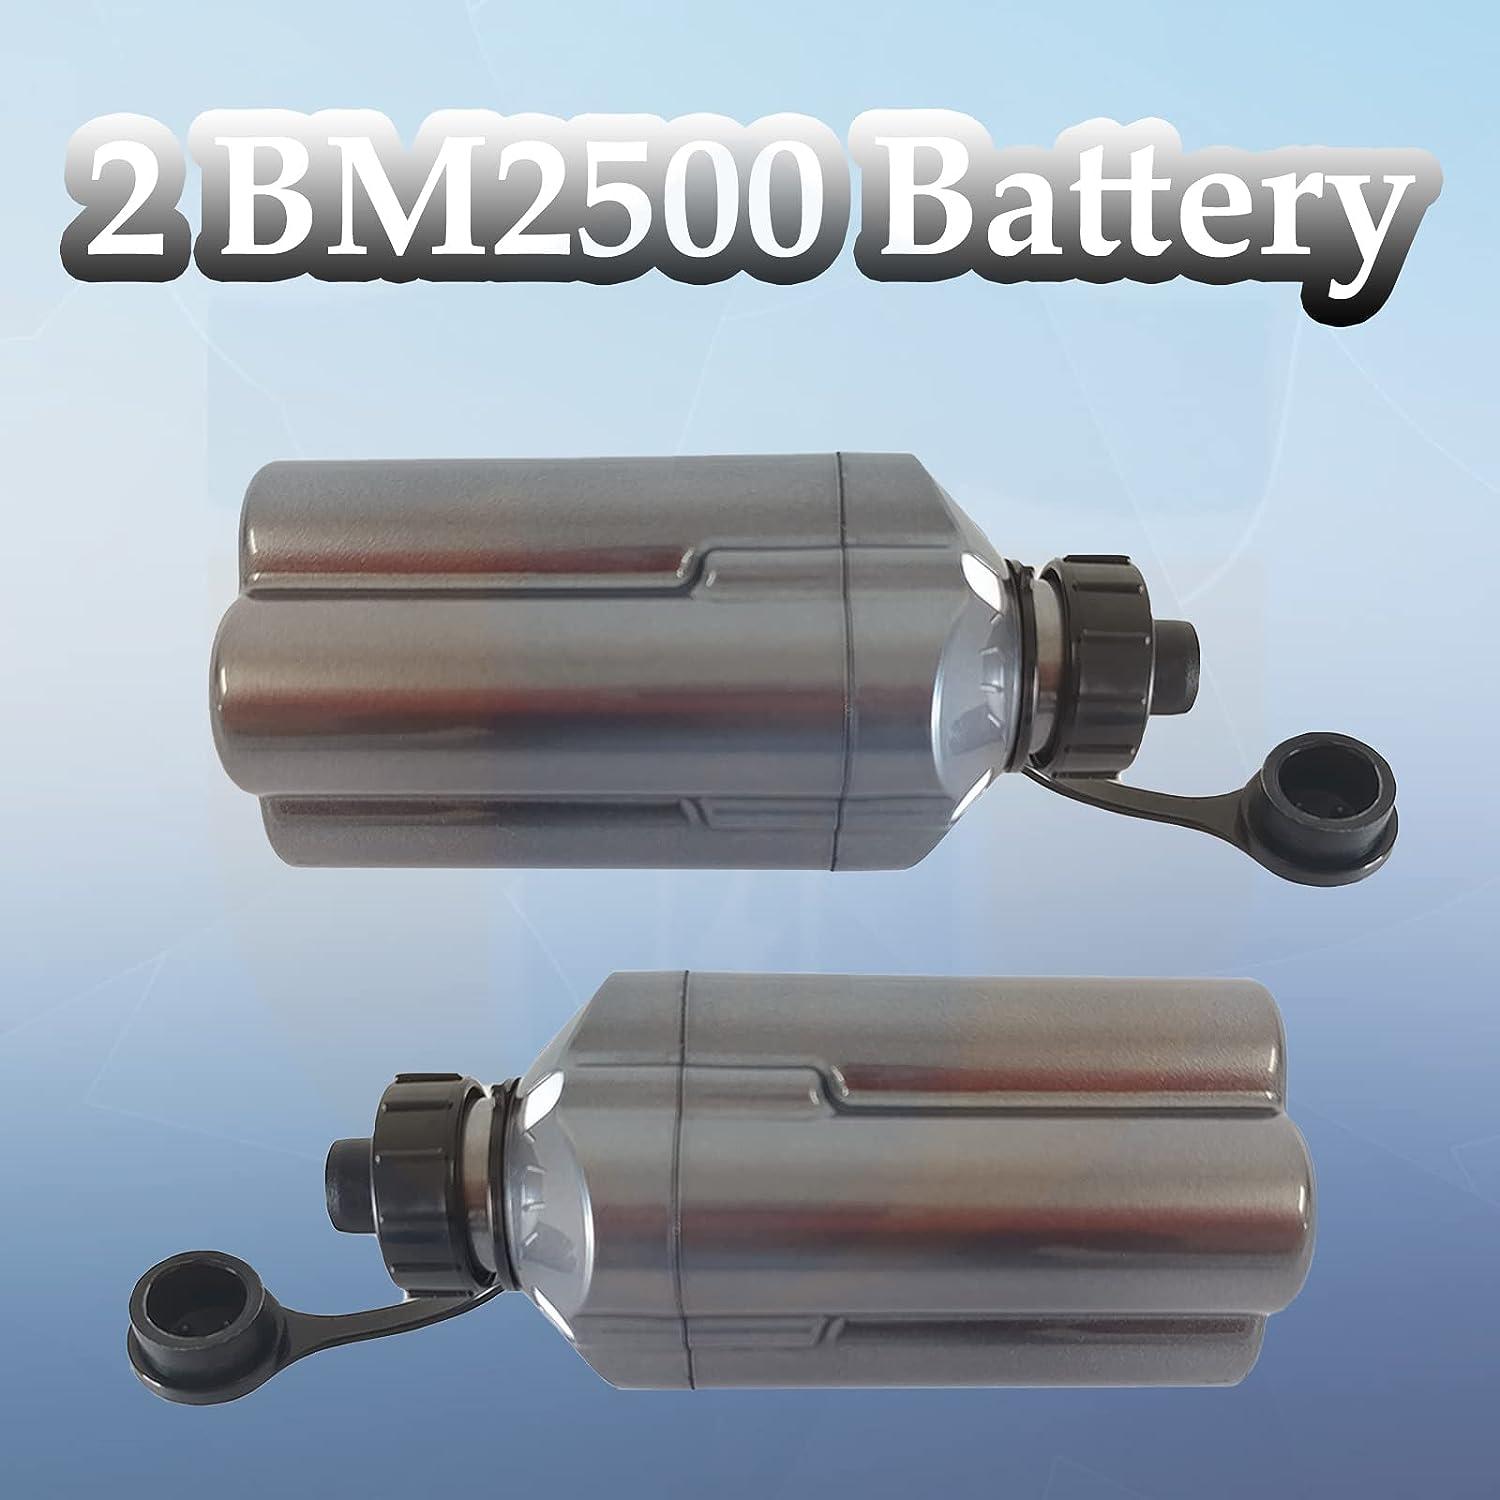 The Power Shop (2PCS BM2500/BM2300) Fishing Reel Battery